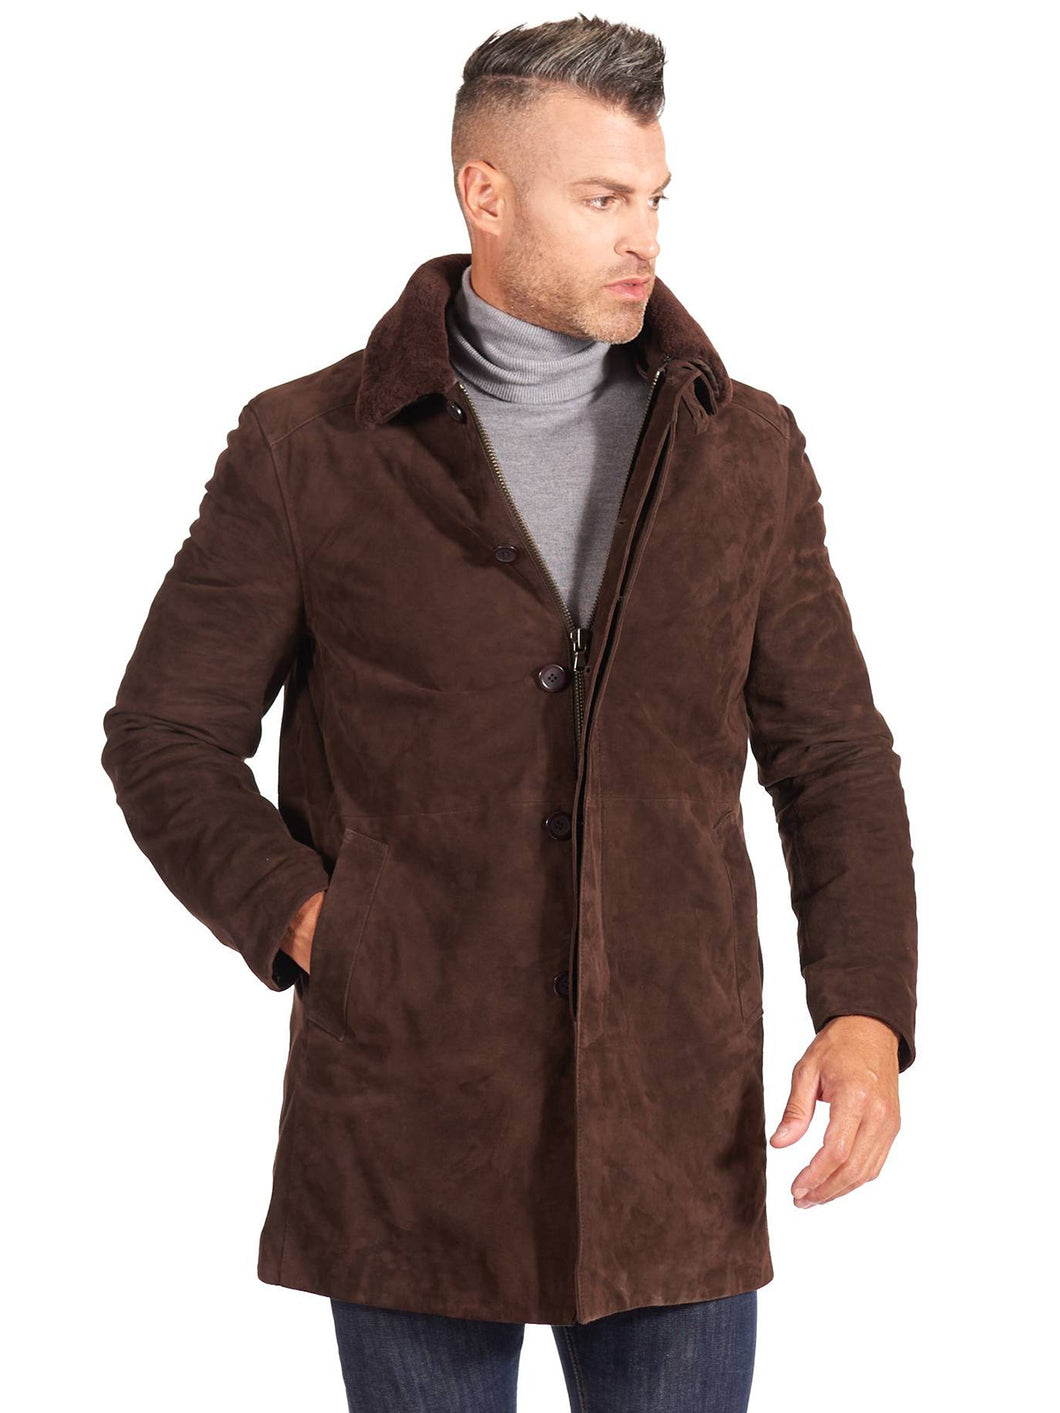 Dark brown suede leather coat